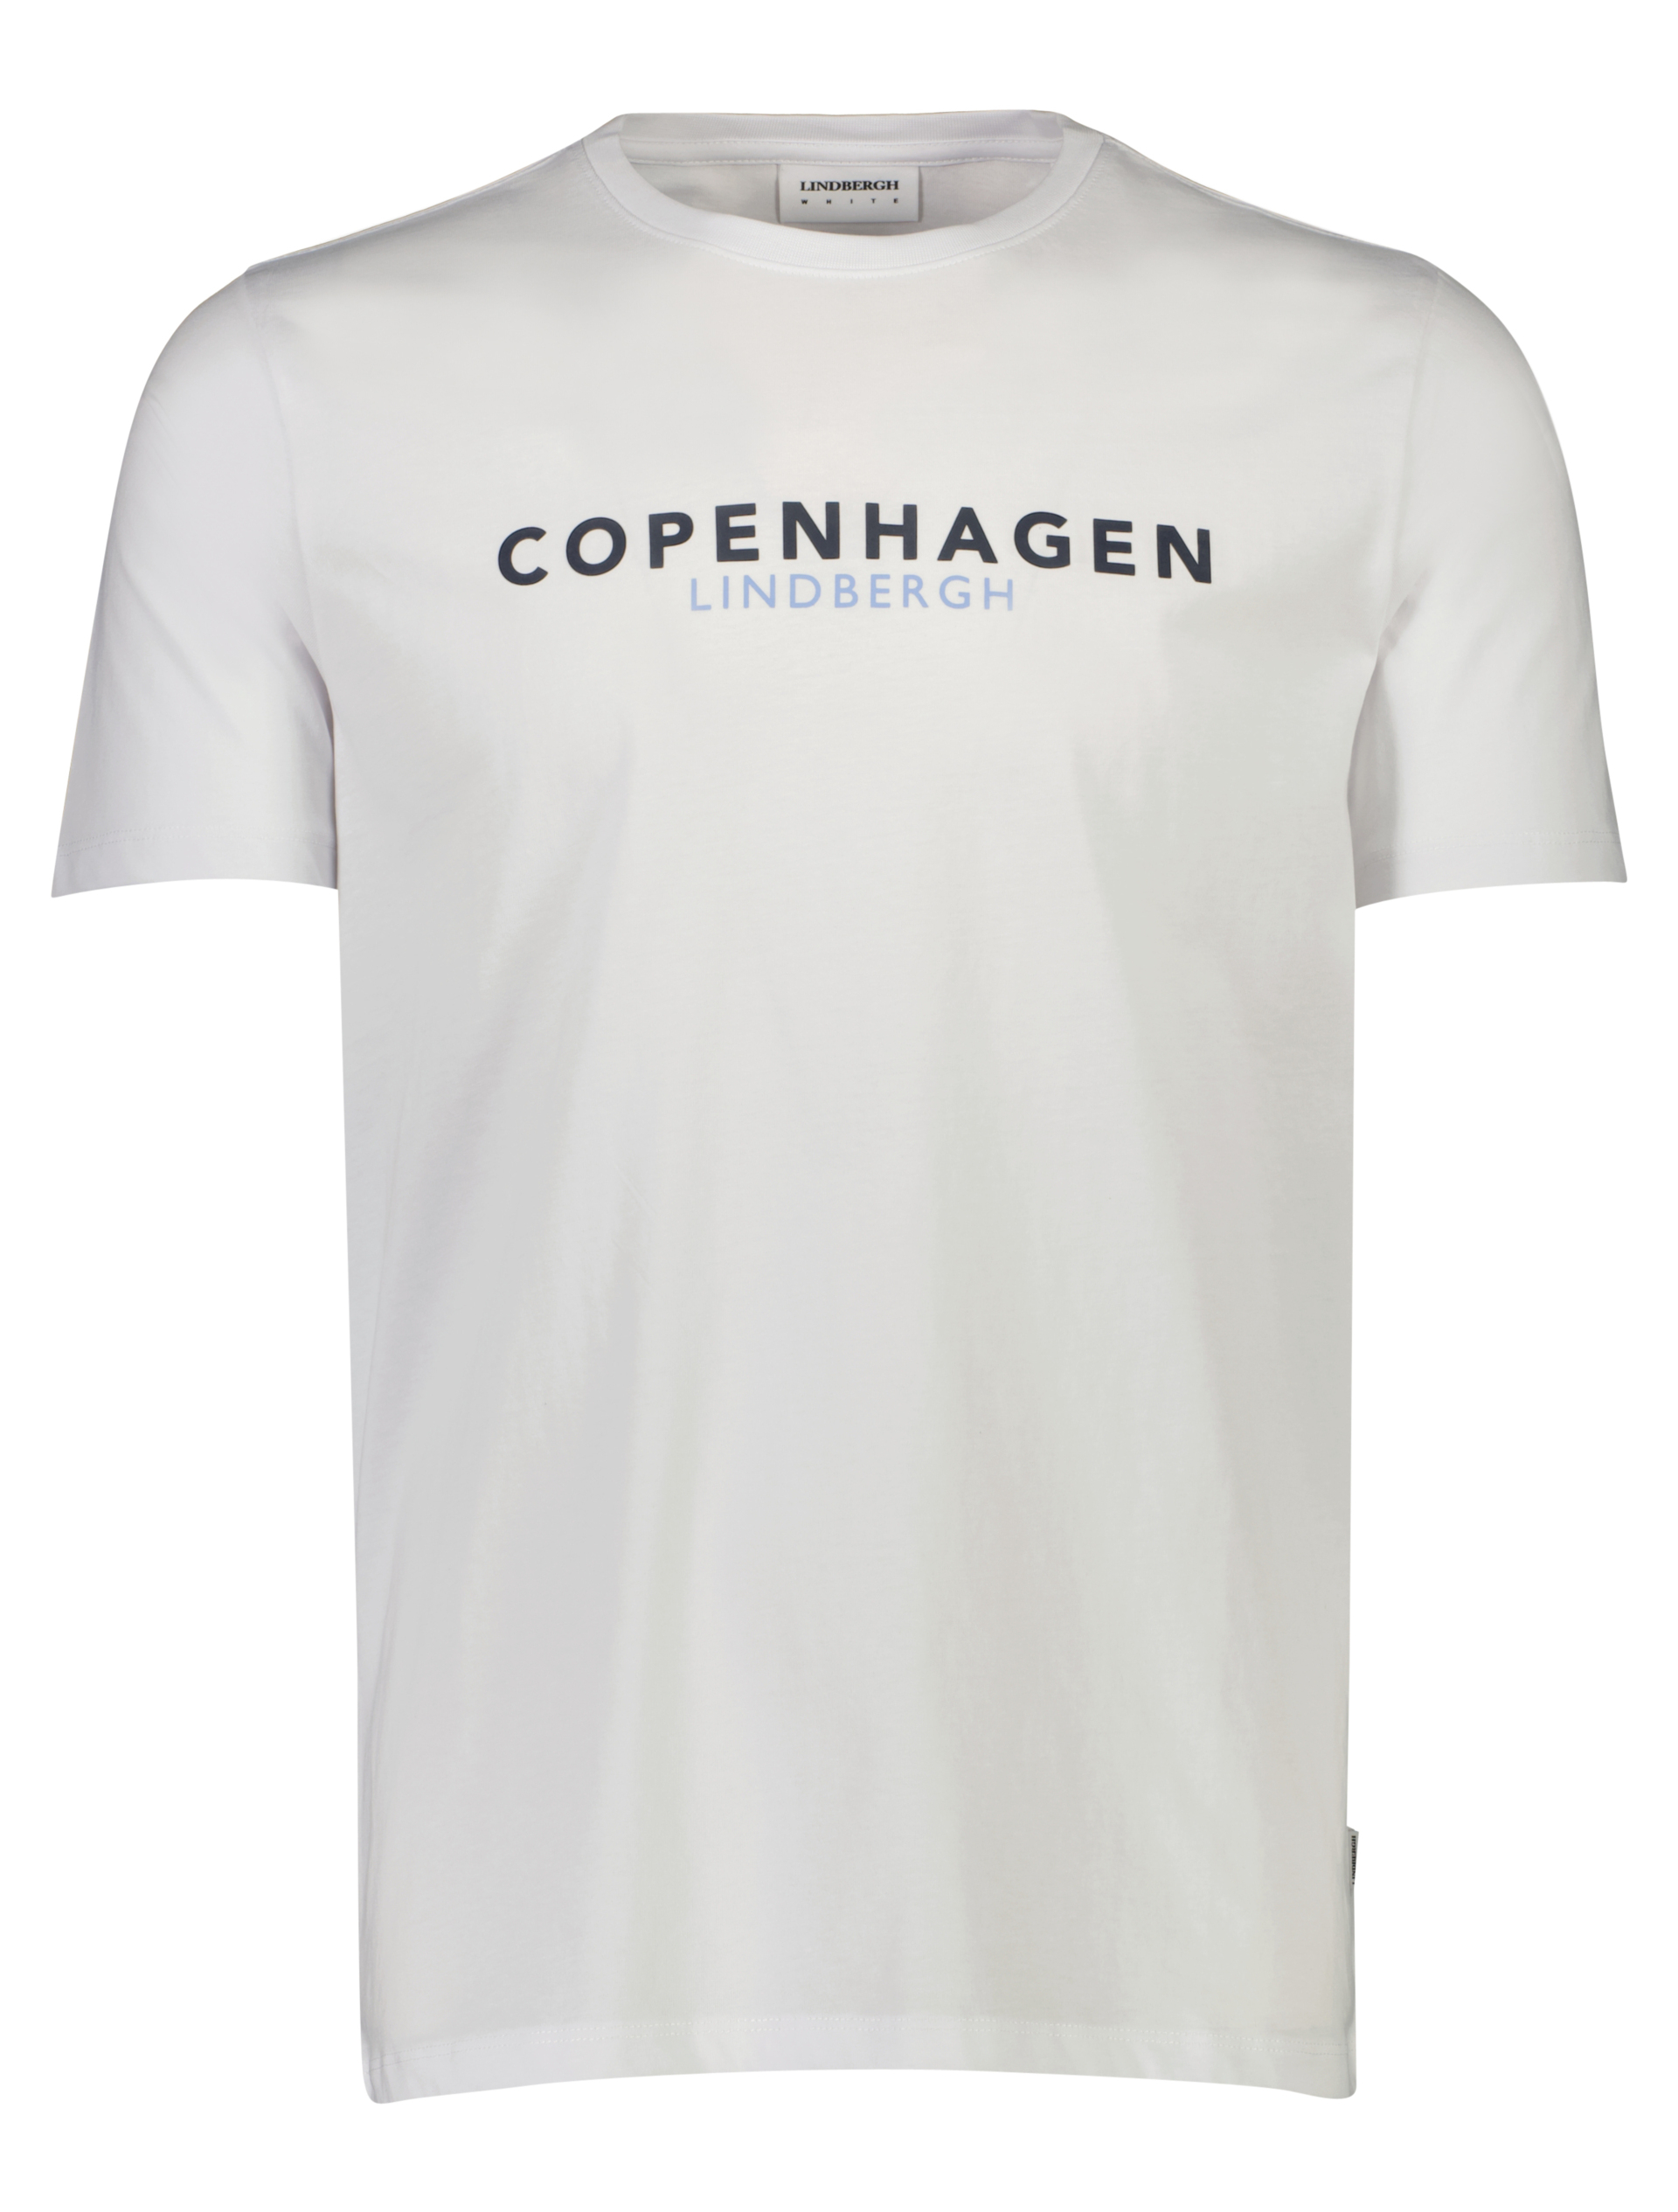 Lindbergh T-shirt wit / white 124